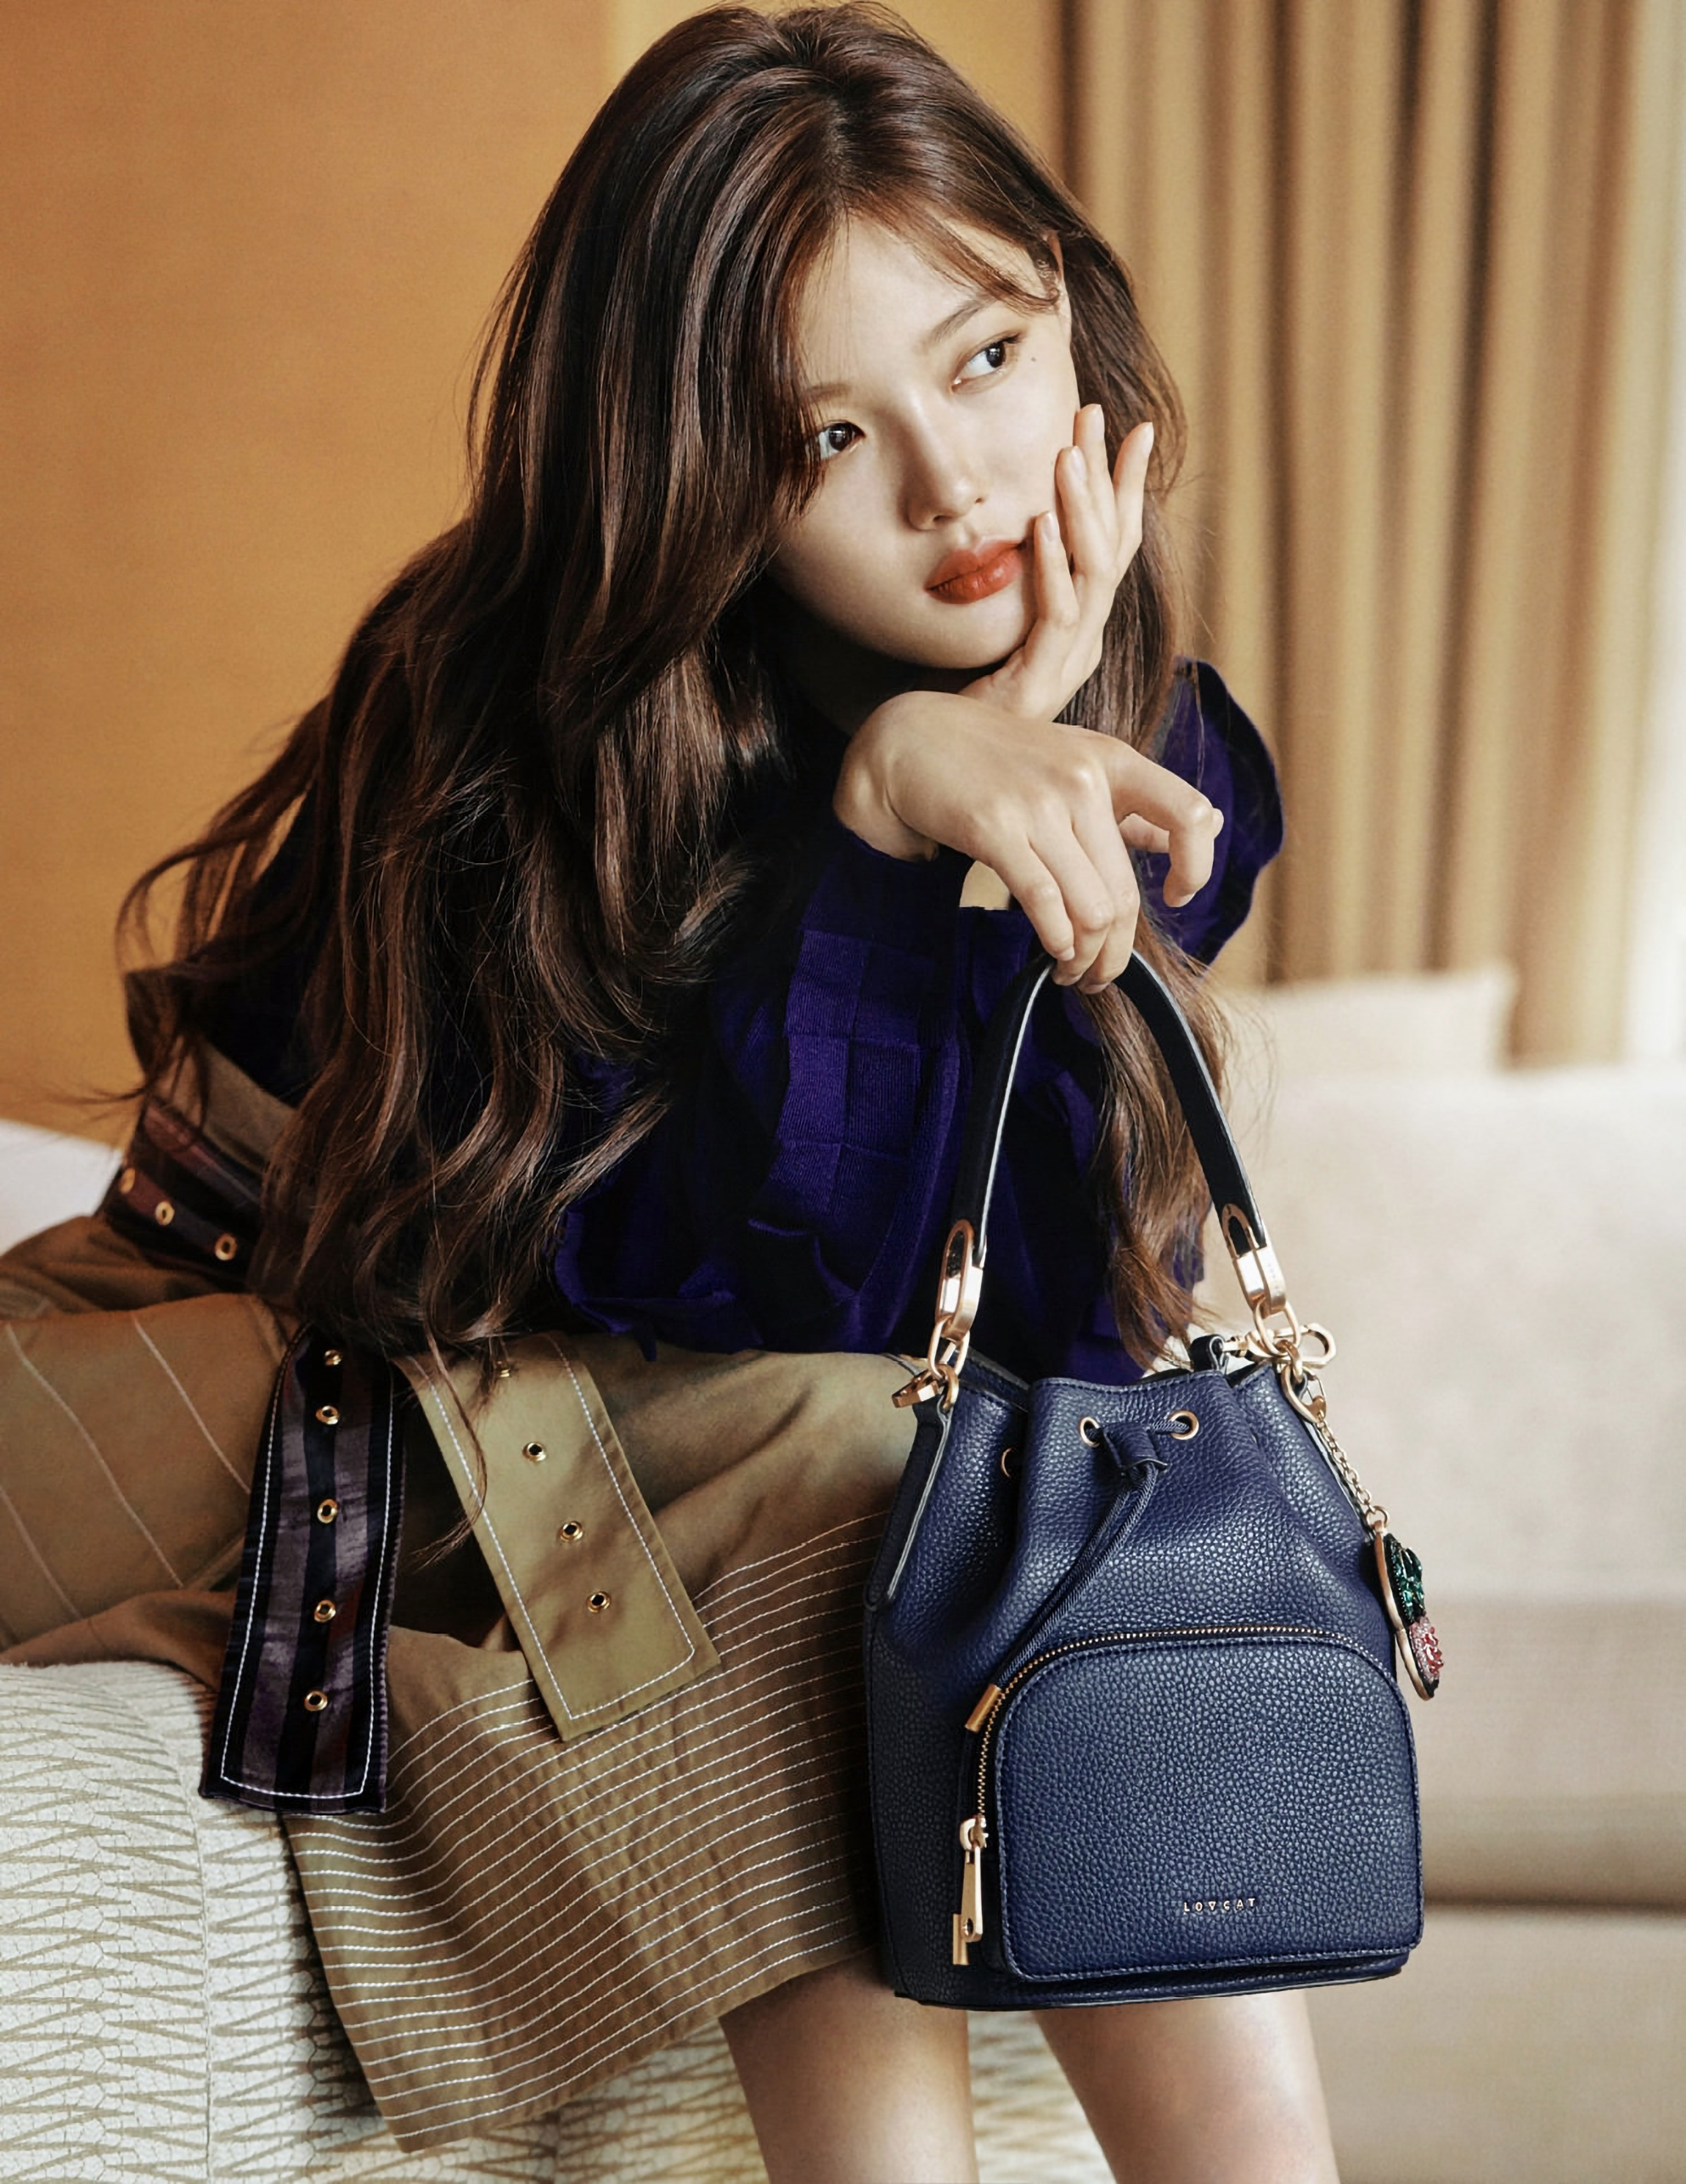 Kim Yoo Jung Actress Wallpaper, HD Celebrities 4K Wallpapers, Images ...